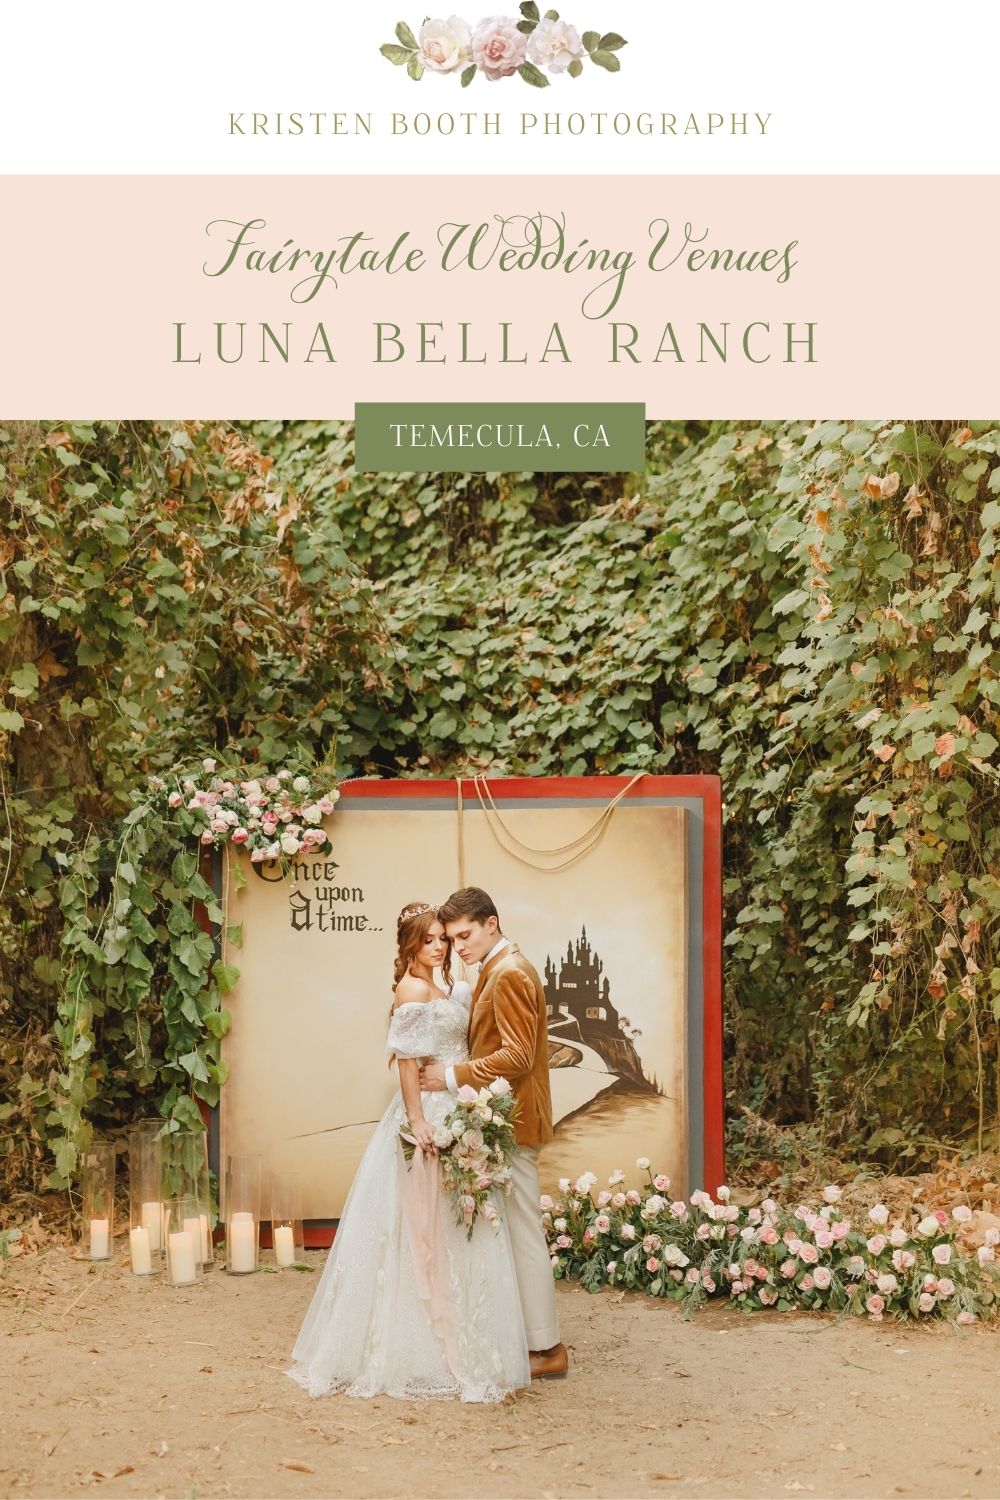 Luna Bella Ranch forest wedding venue in Temecula, California